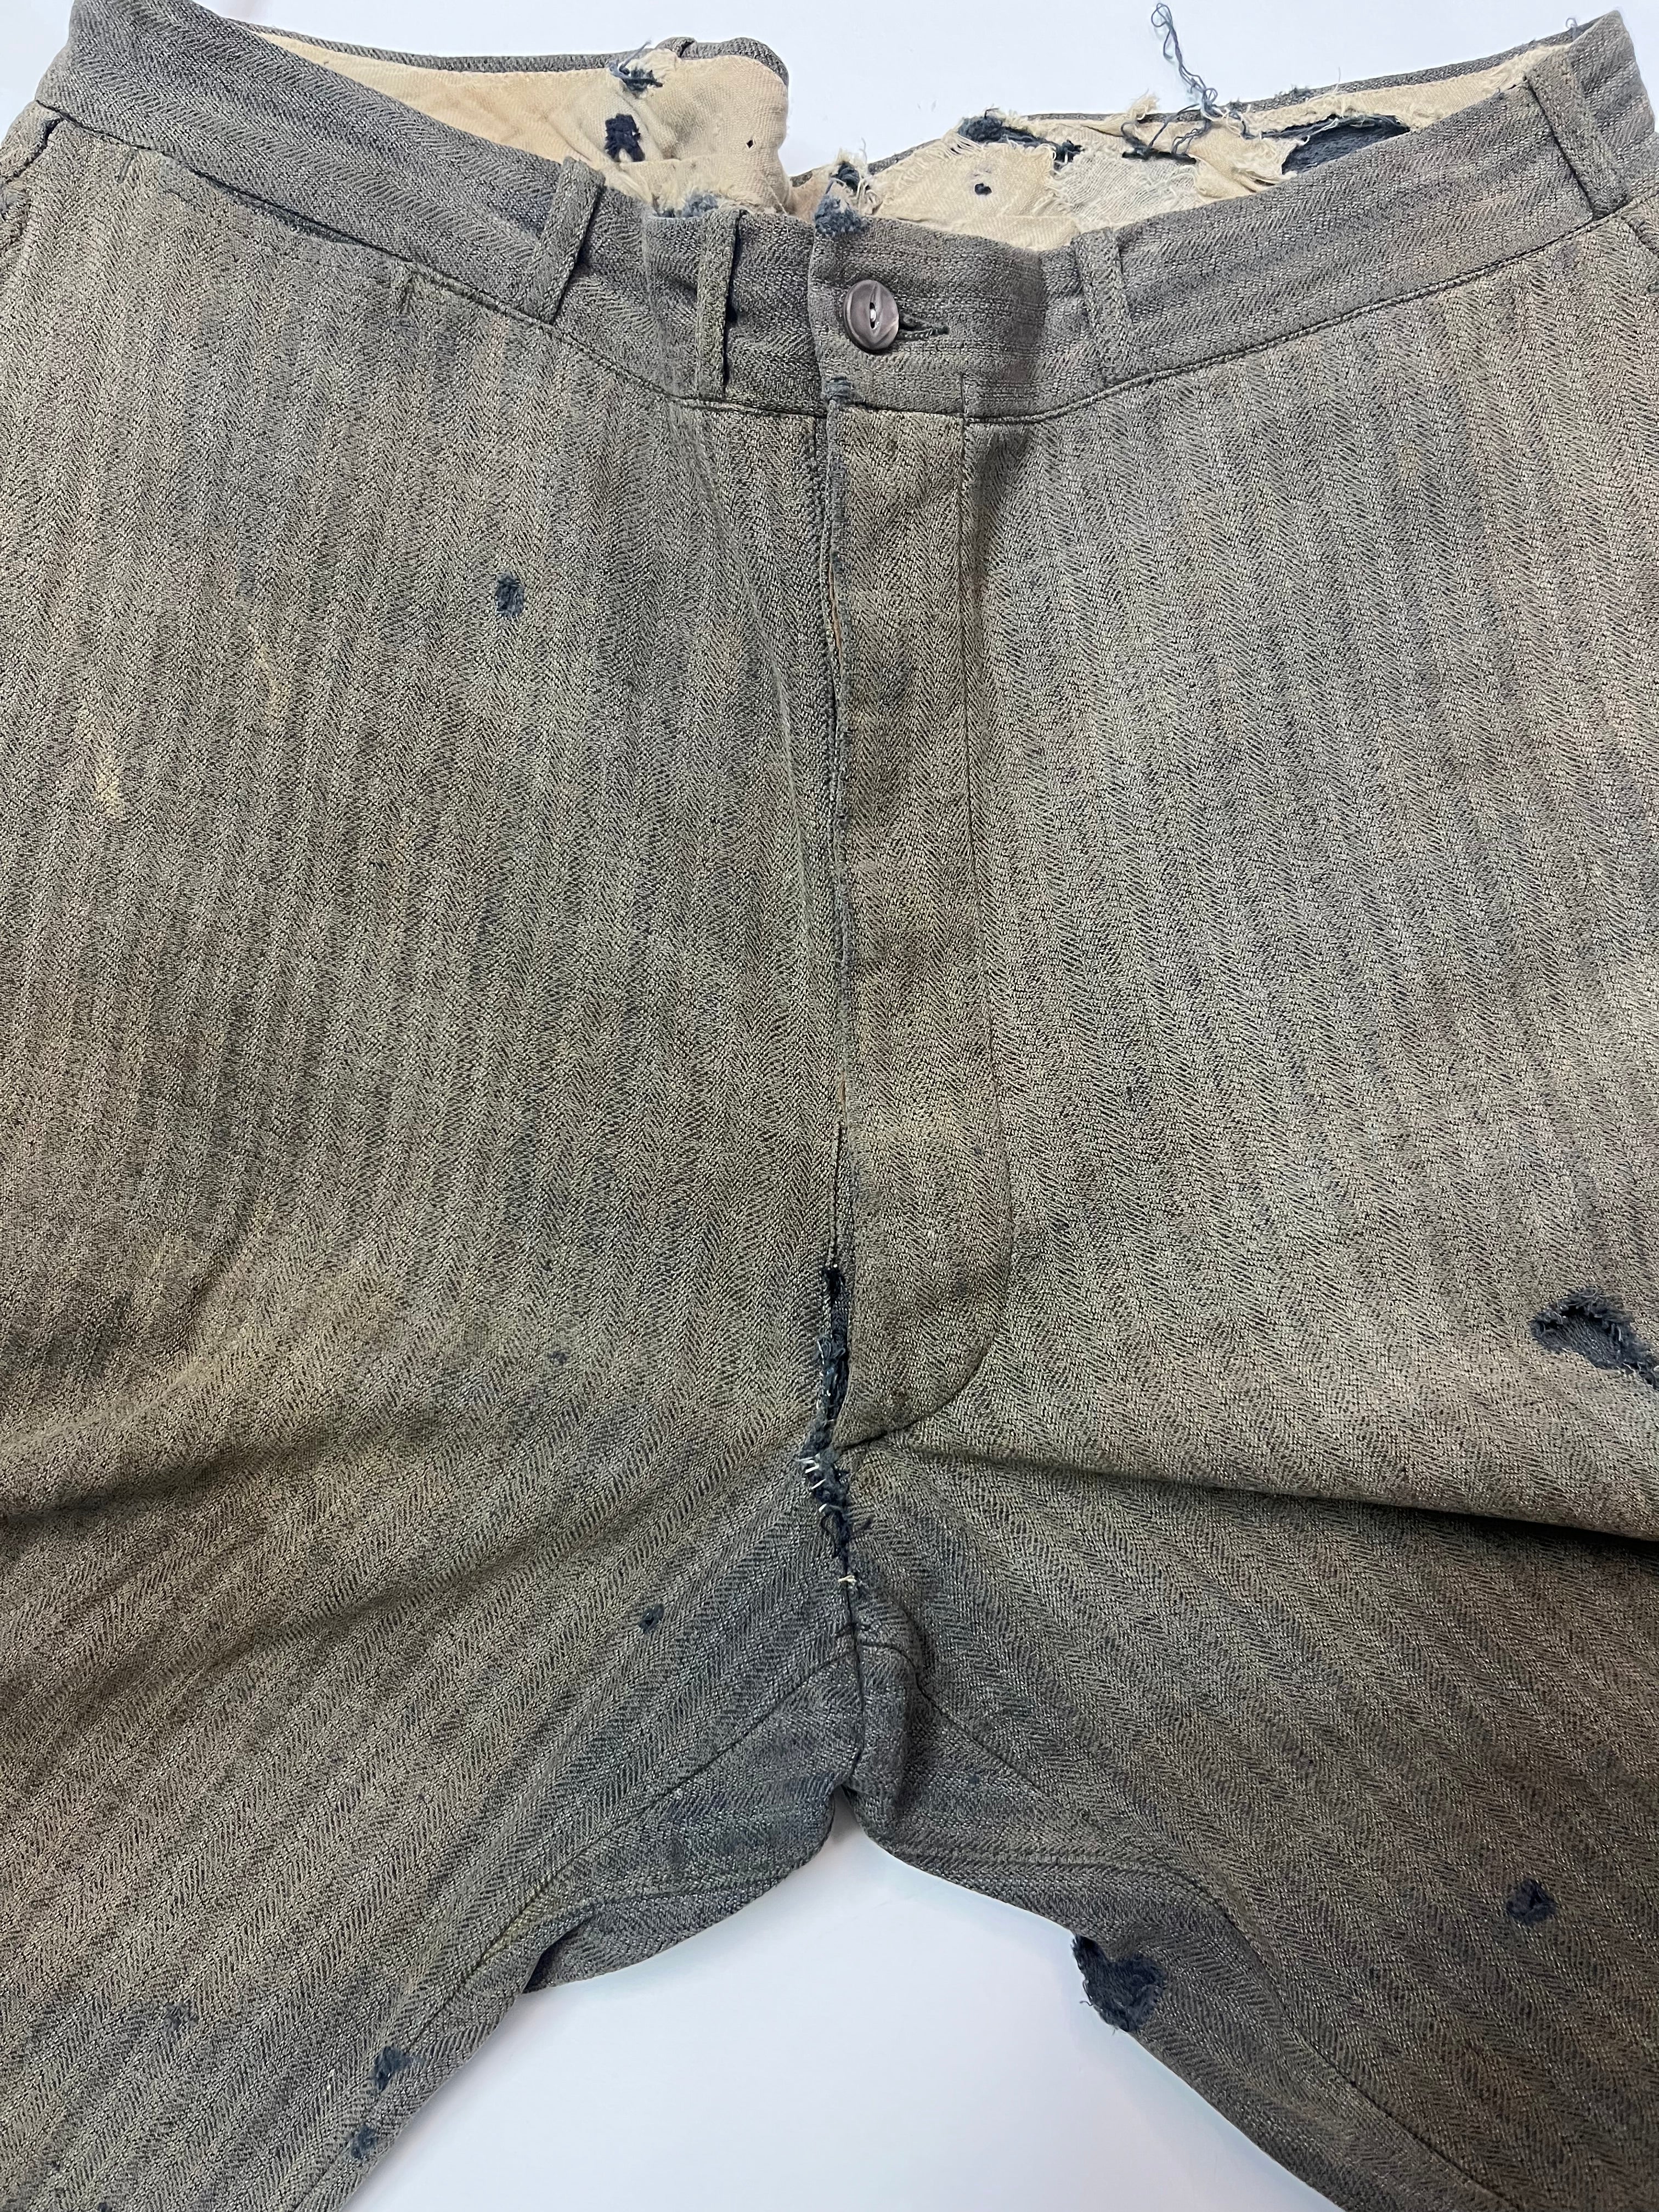 1940s/50s Distressed Striped Twill Work Pants - Faded Olive Drab - 35x28